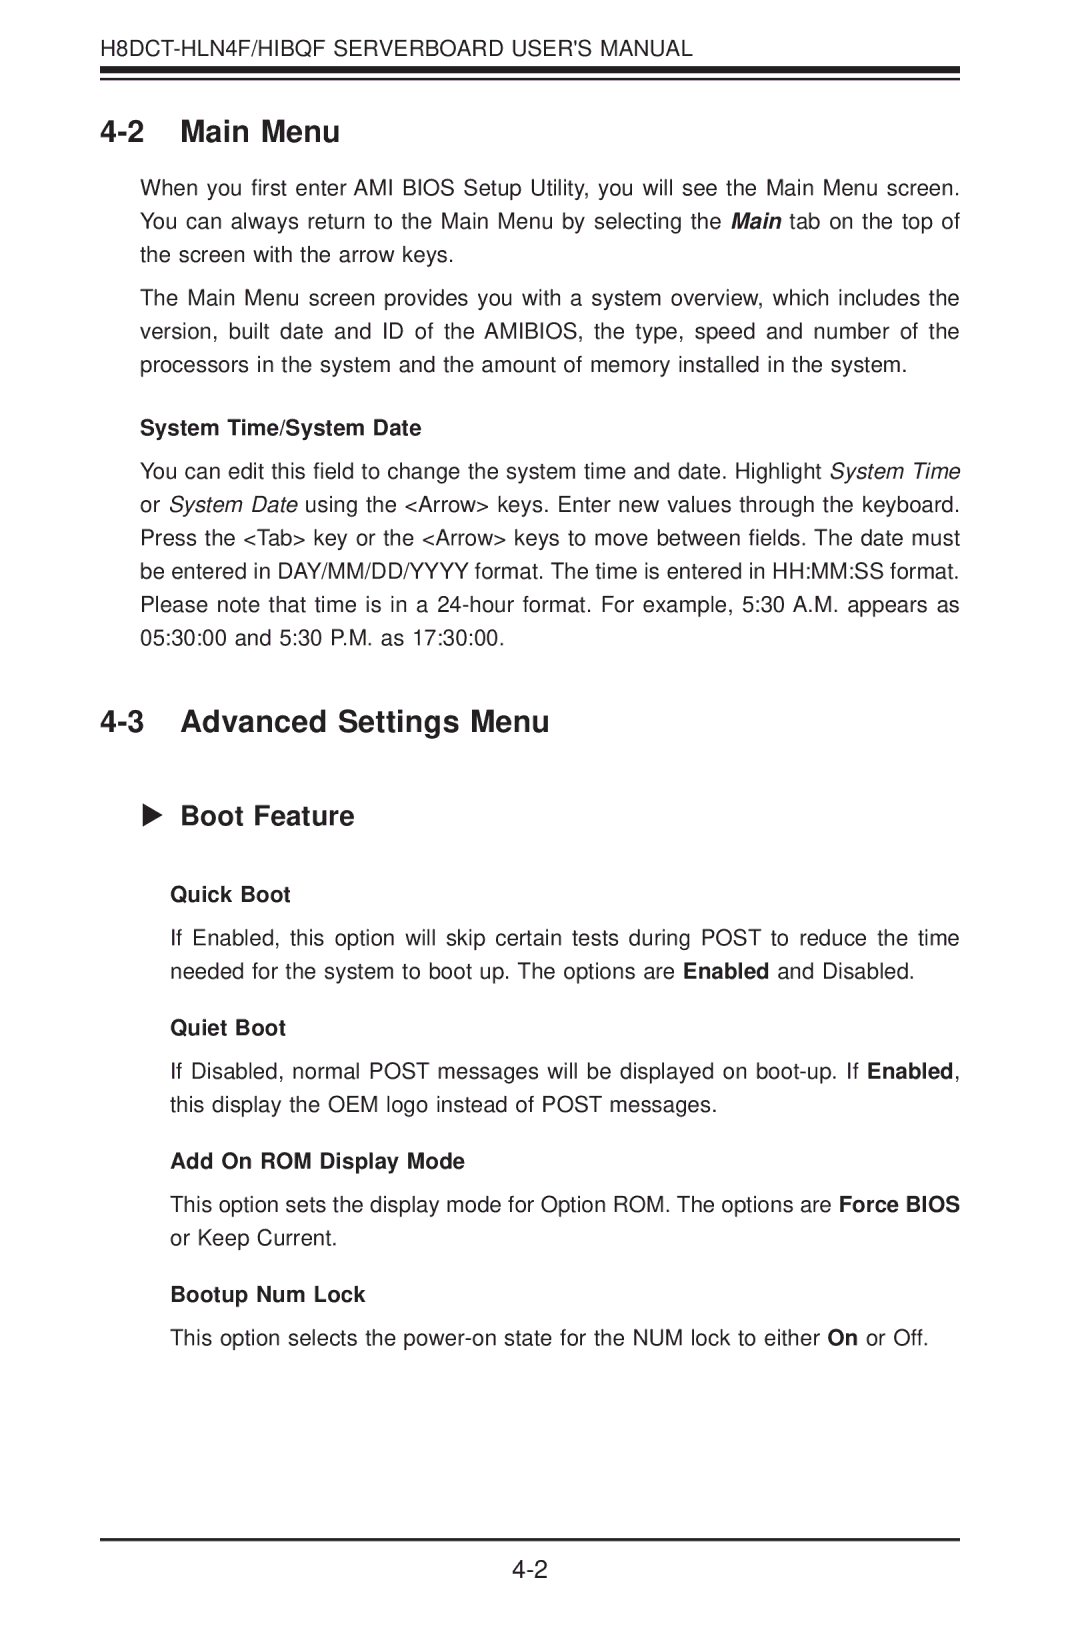 SUPER MICRO Computer H8DCT-HLN4F user manual Main Menu, Advanced Settings Menu,  Boot Feature 